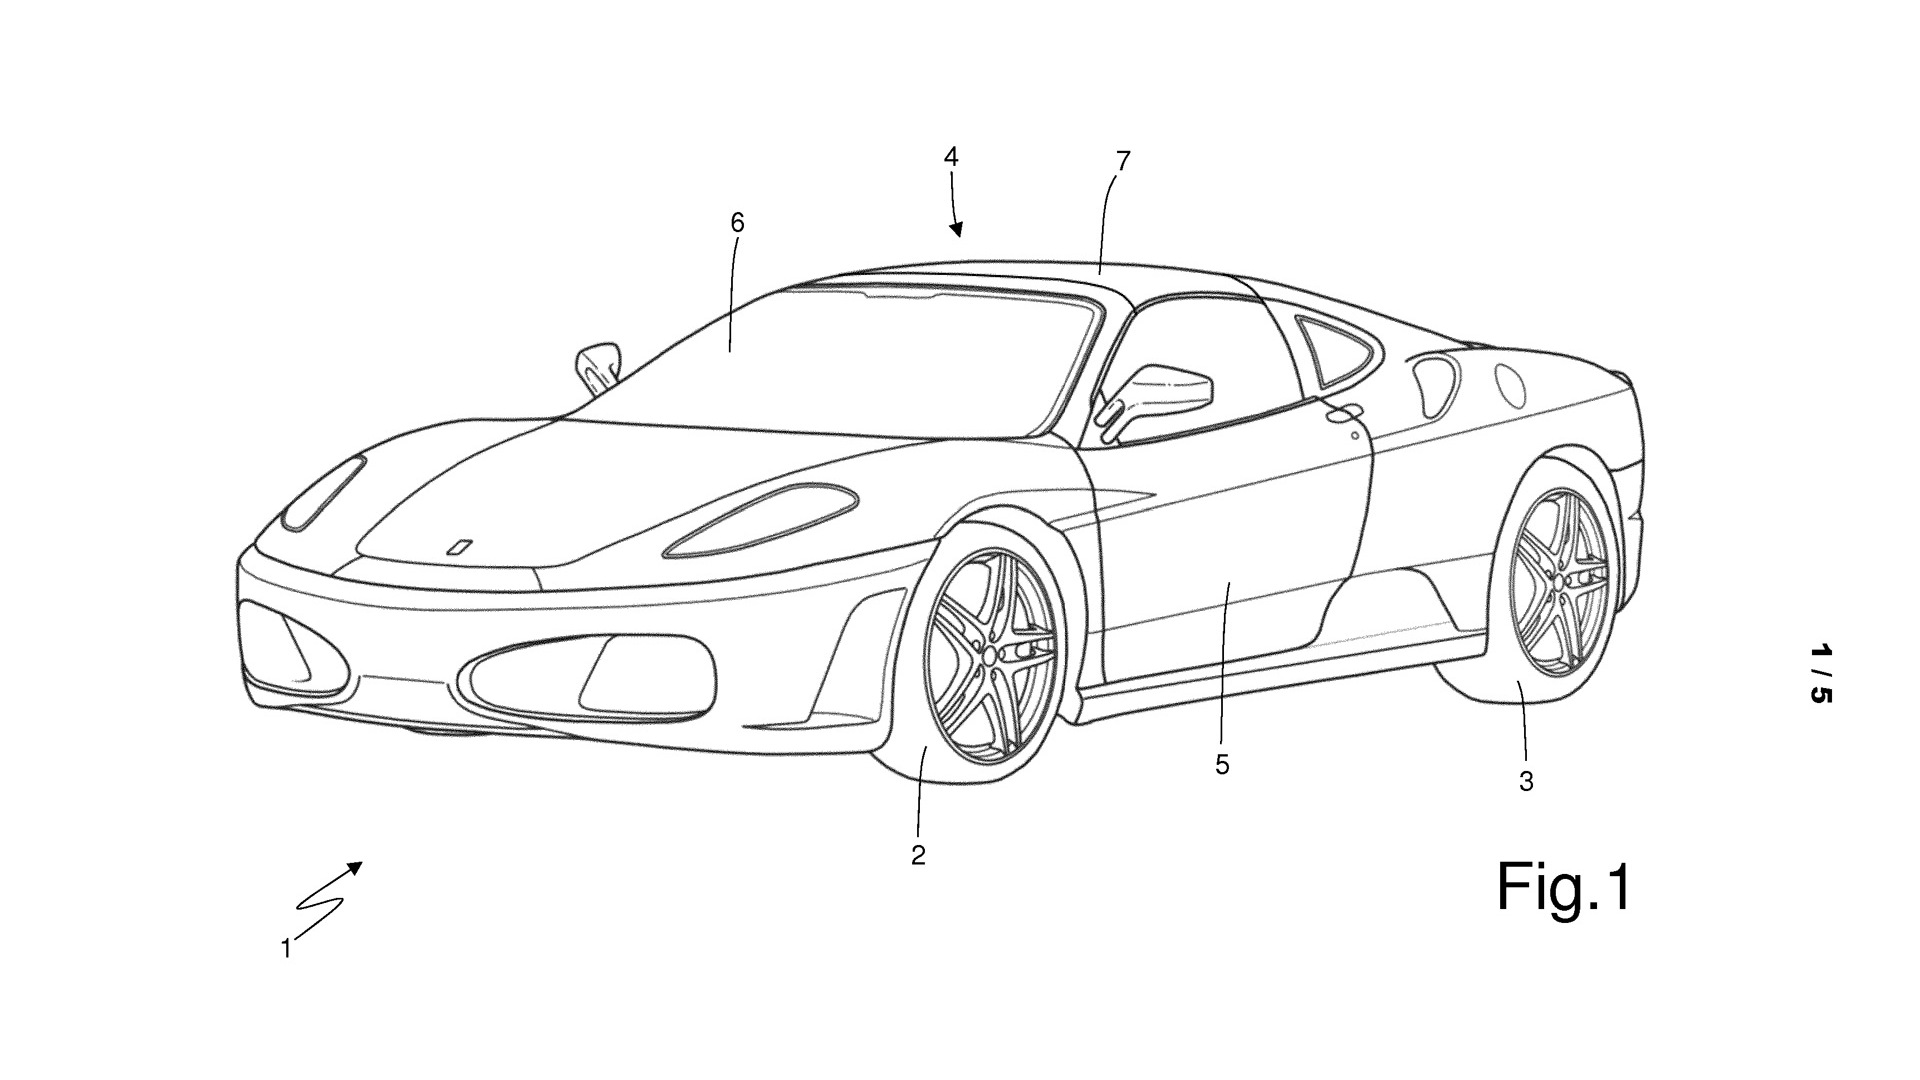 Ferrari patent for car with targa top